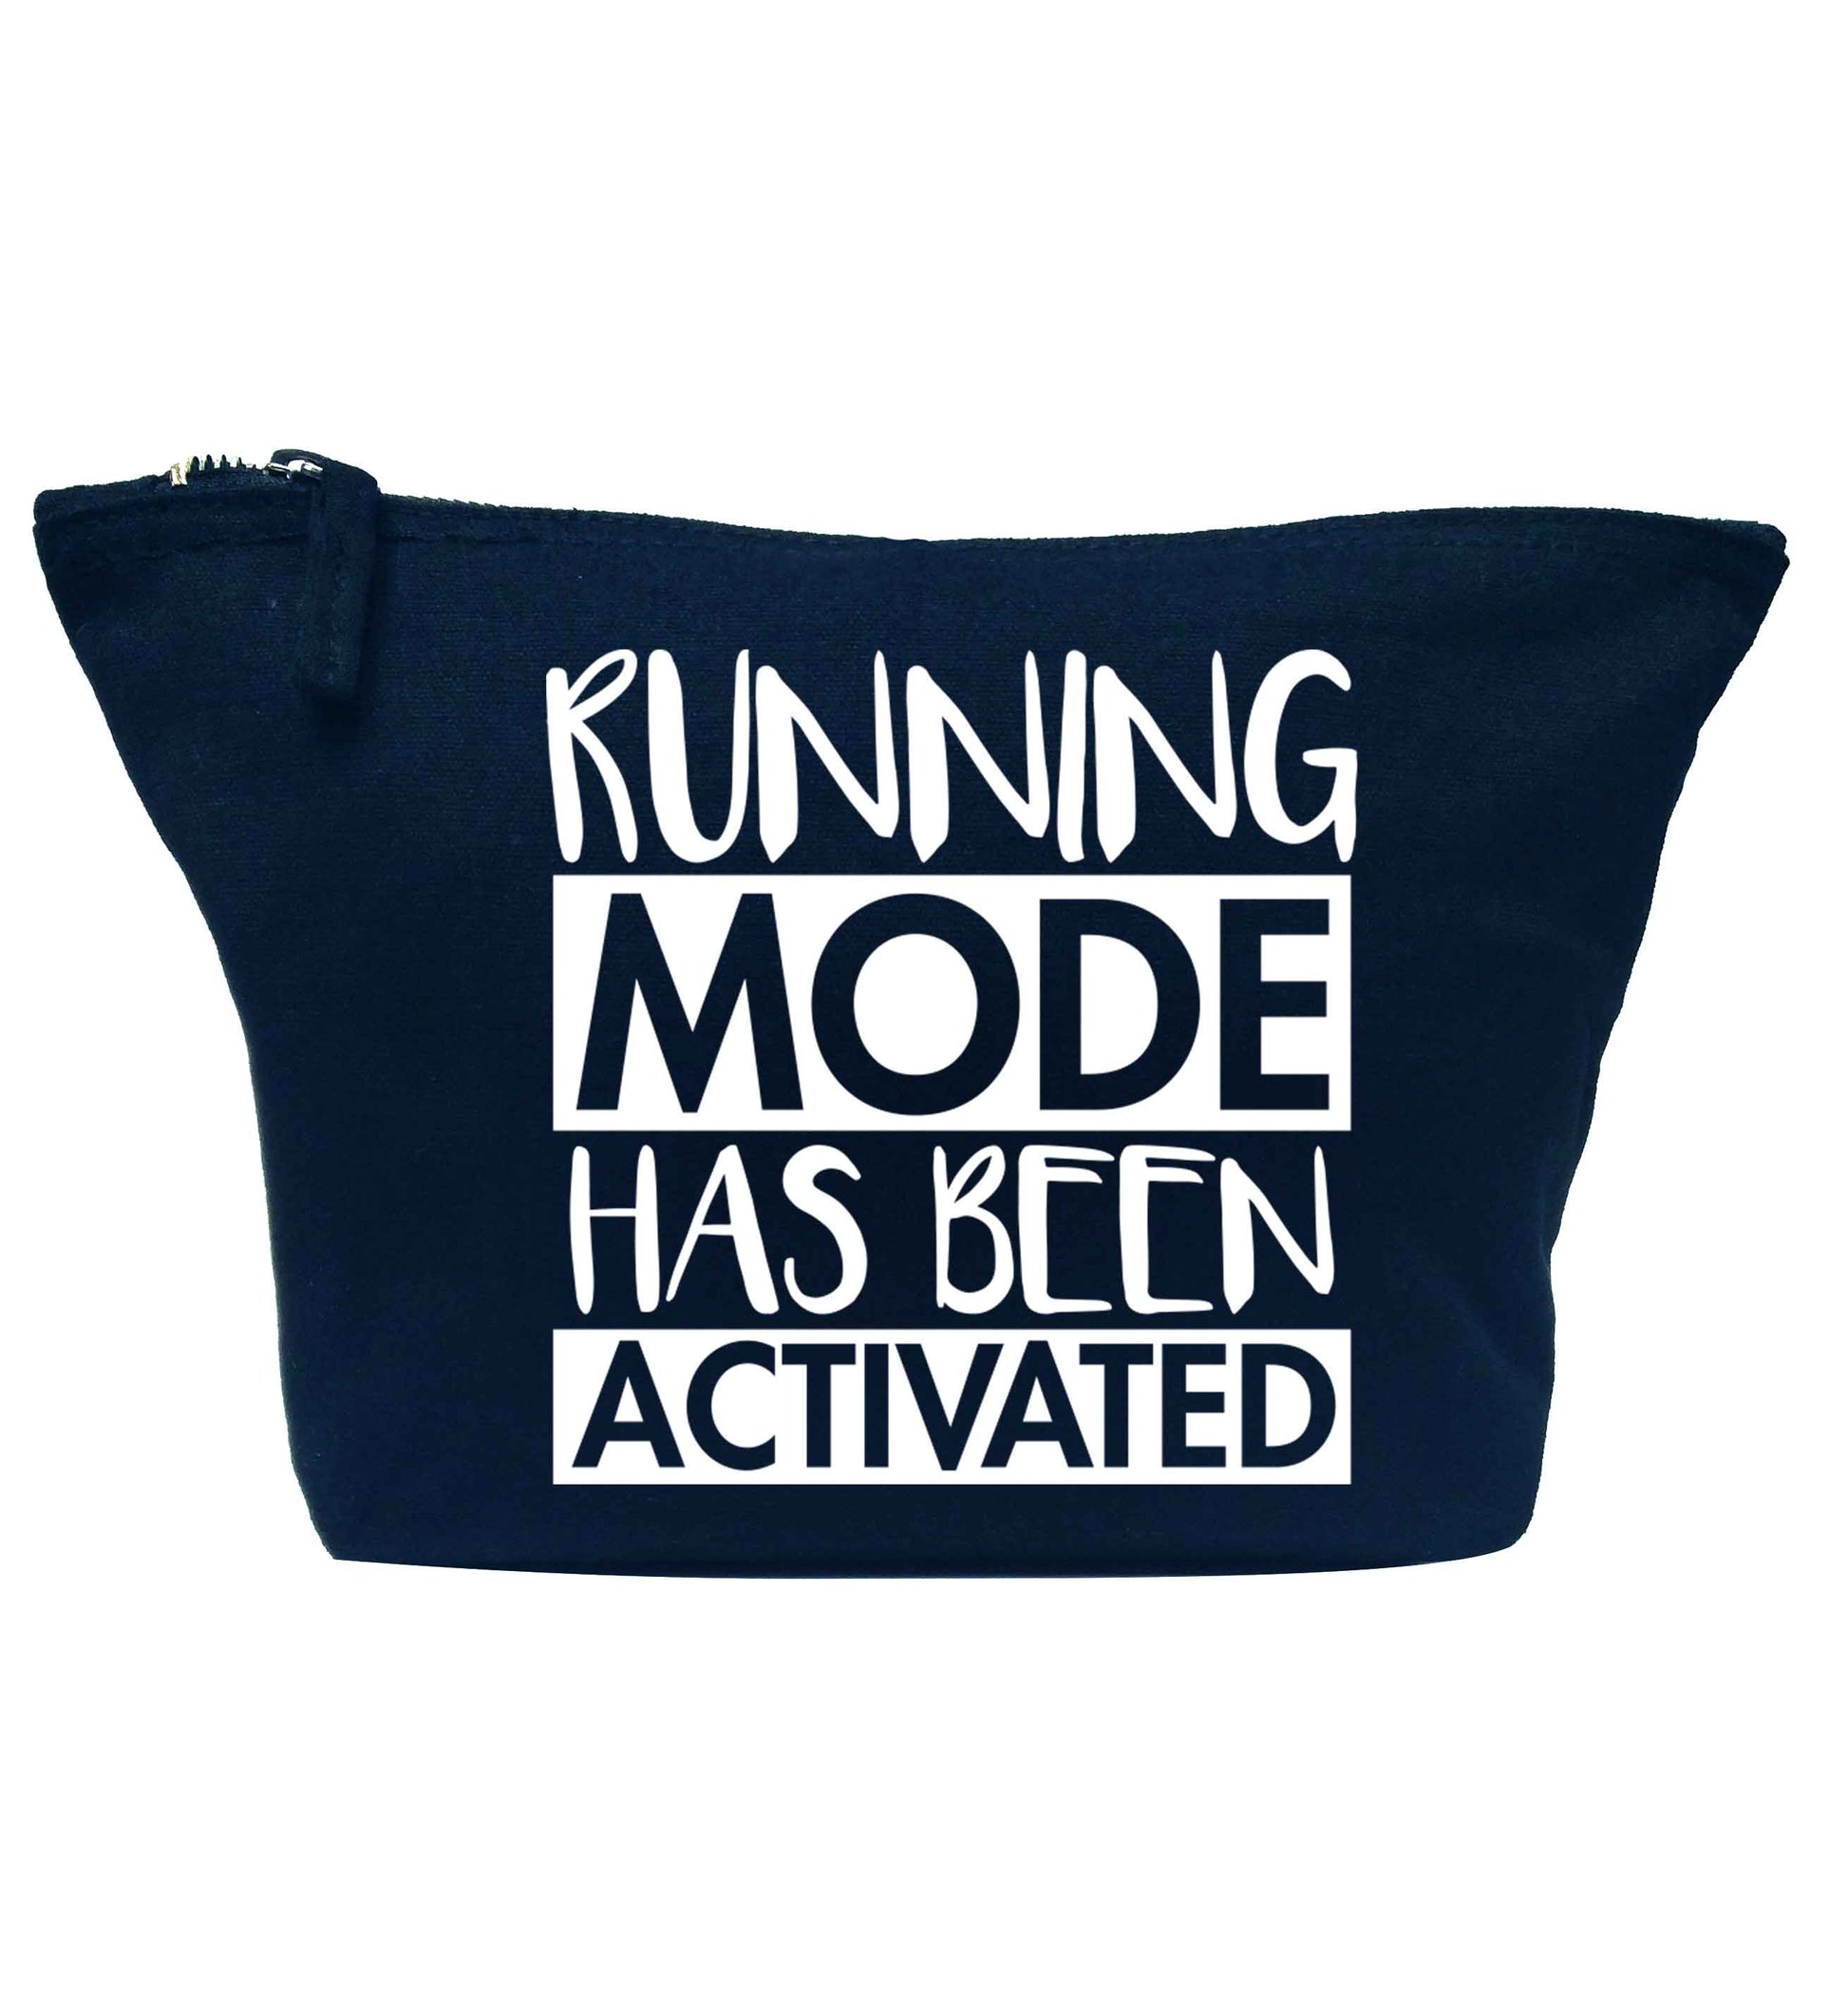 Running mode has been activated navy makeup bag